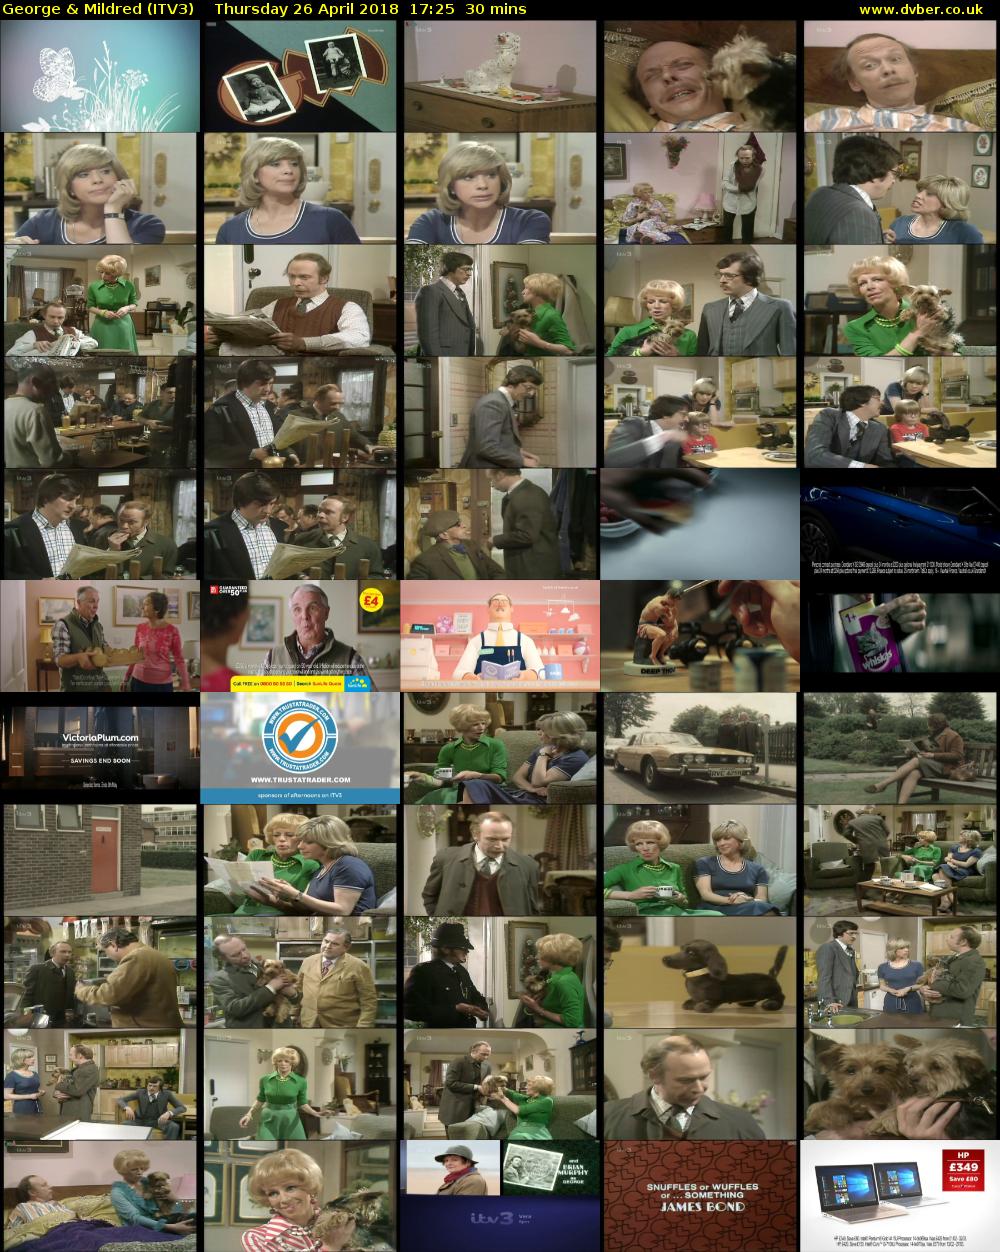 George & Mildred (ITV3) Thursday 26 April 2018 17:25 - 17:55